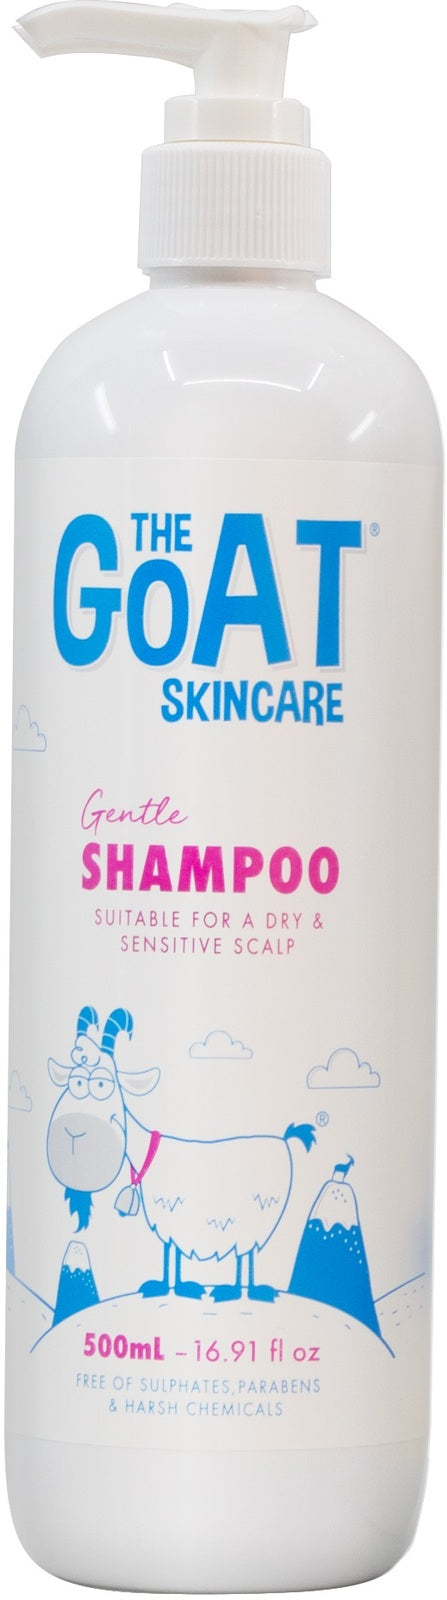 The Goat Skincare: Shampoo (500ml)